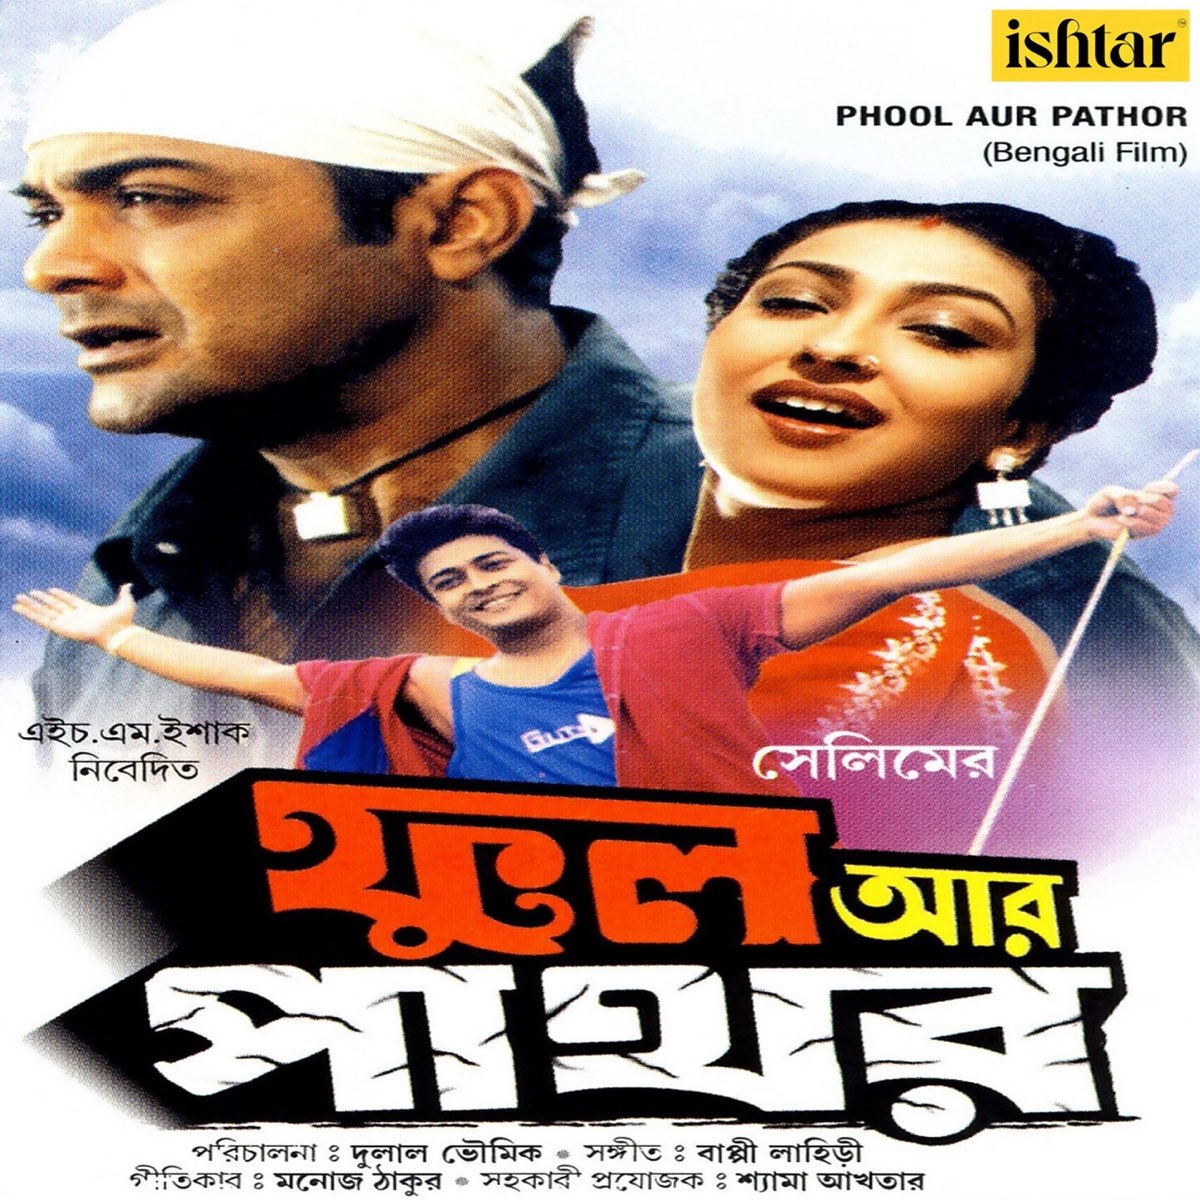 Phool aur pathor bengali movie mp3 song download